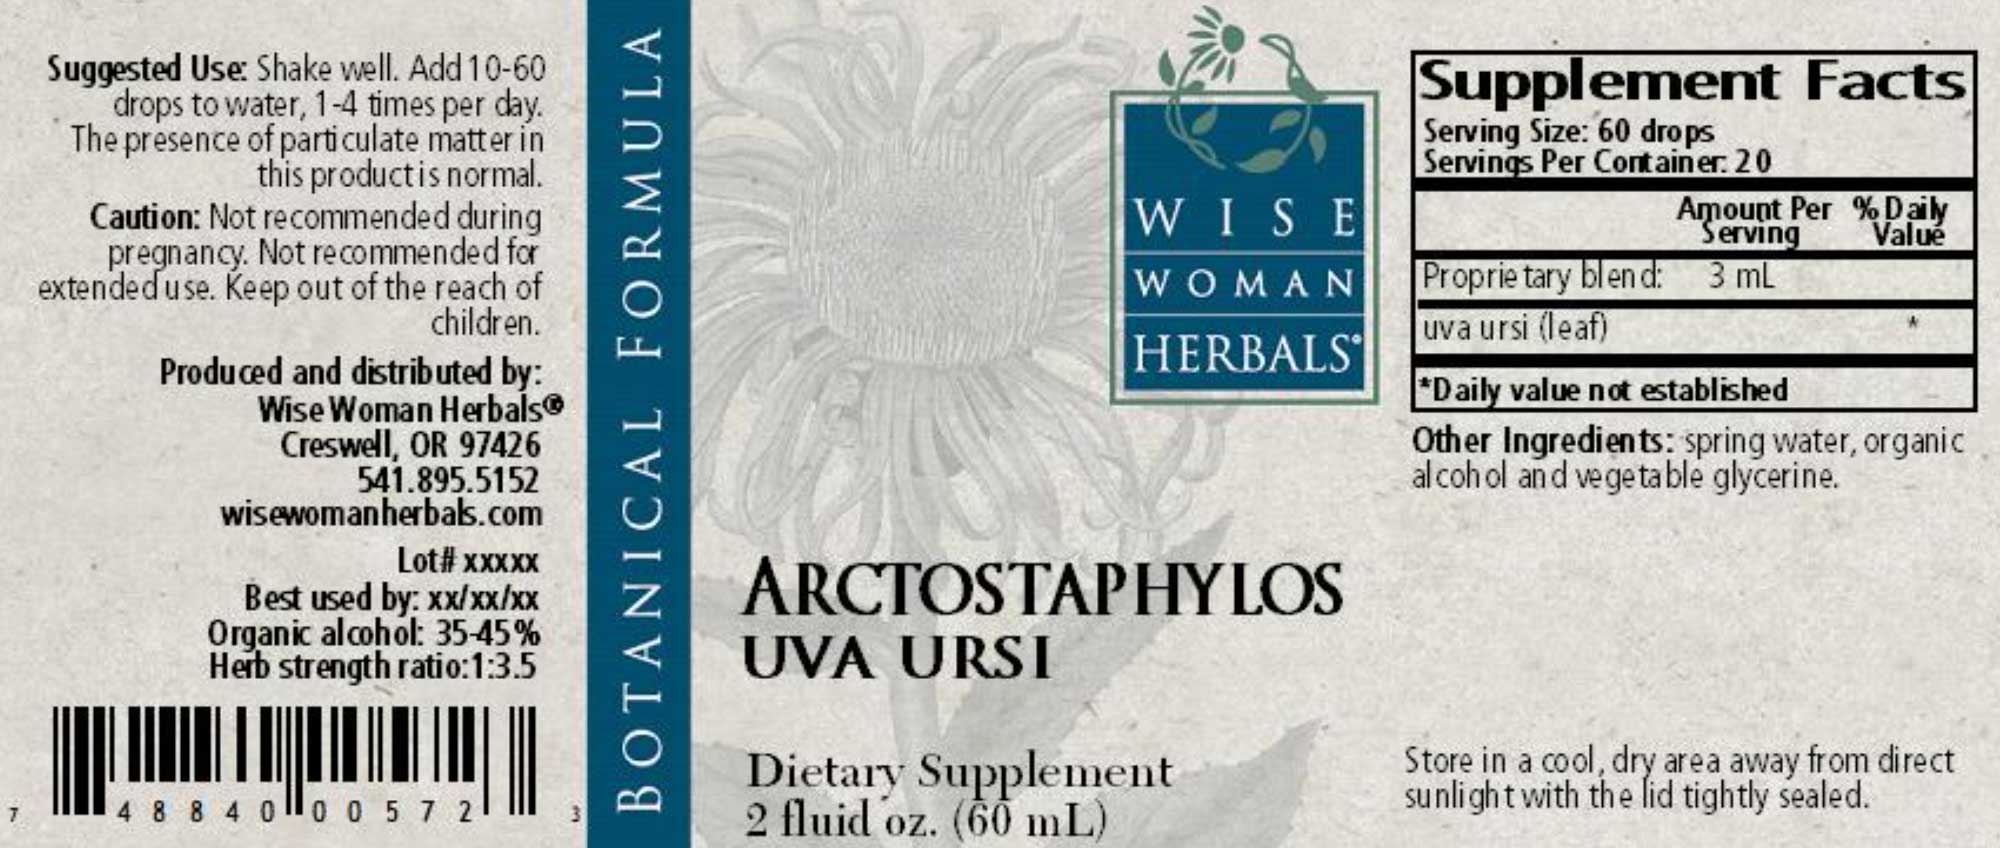 Wise Woman Herbals Arctostaphylos Uva Ursi Label